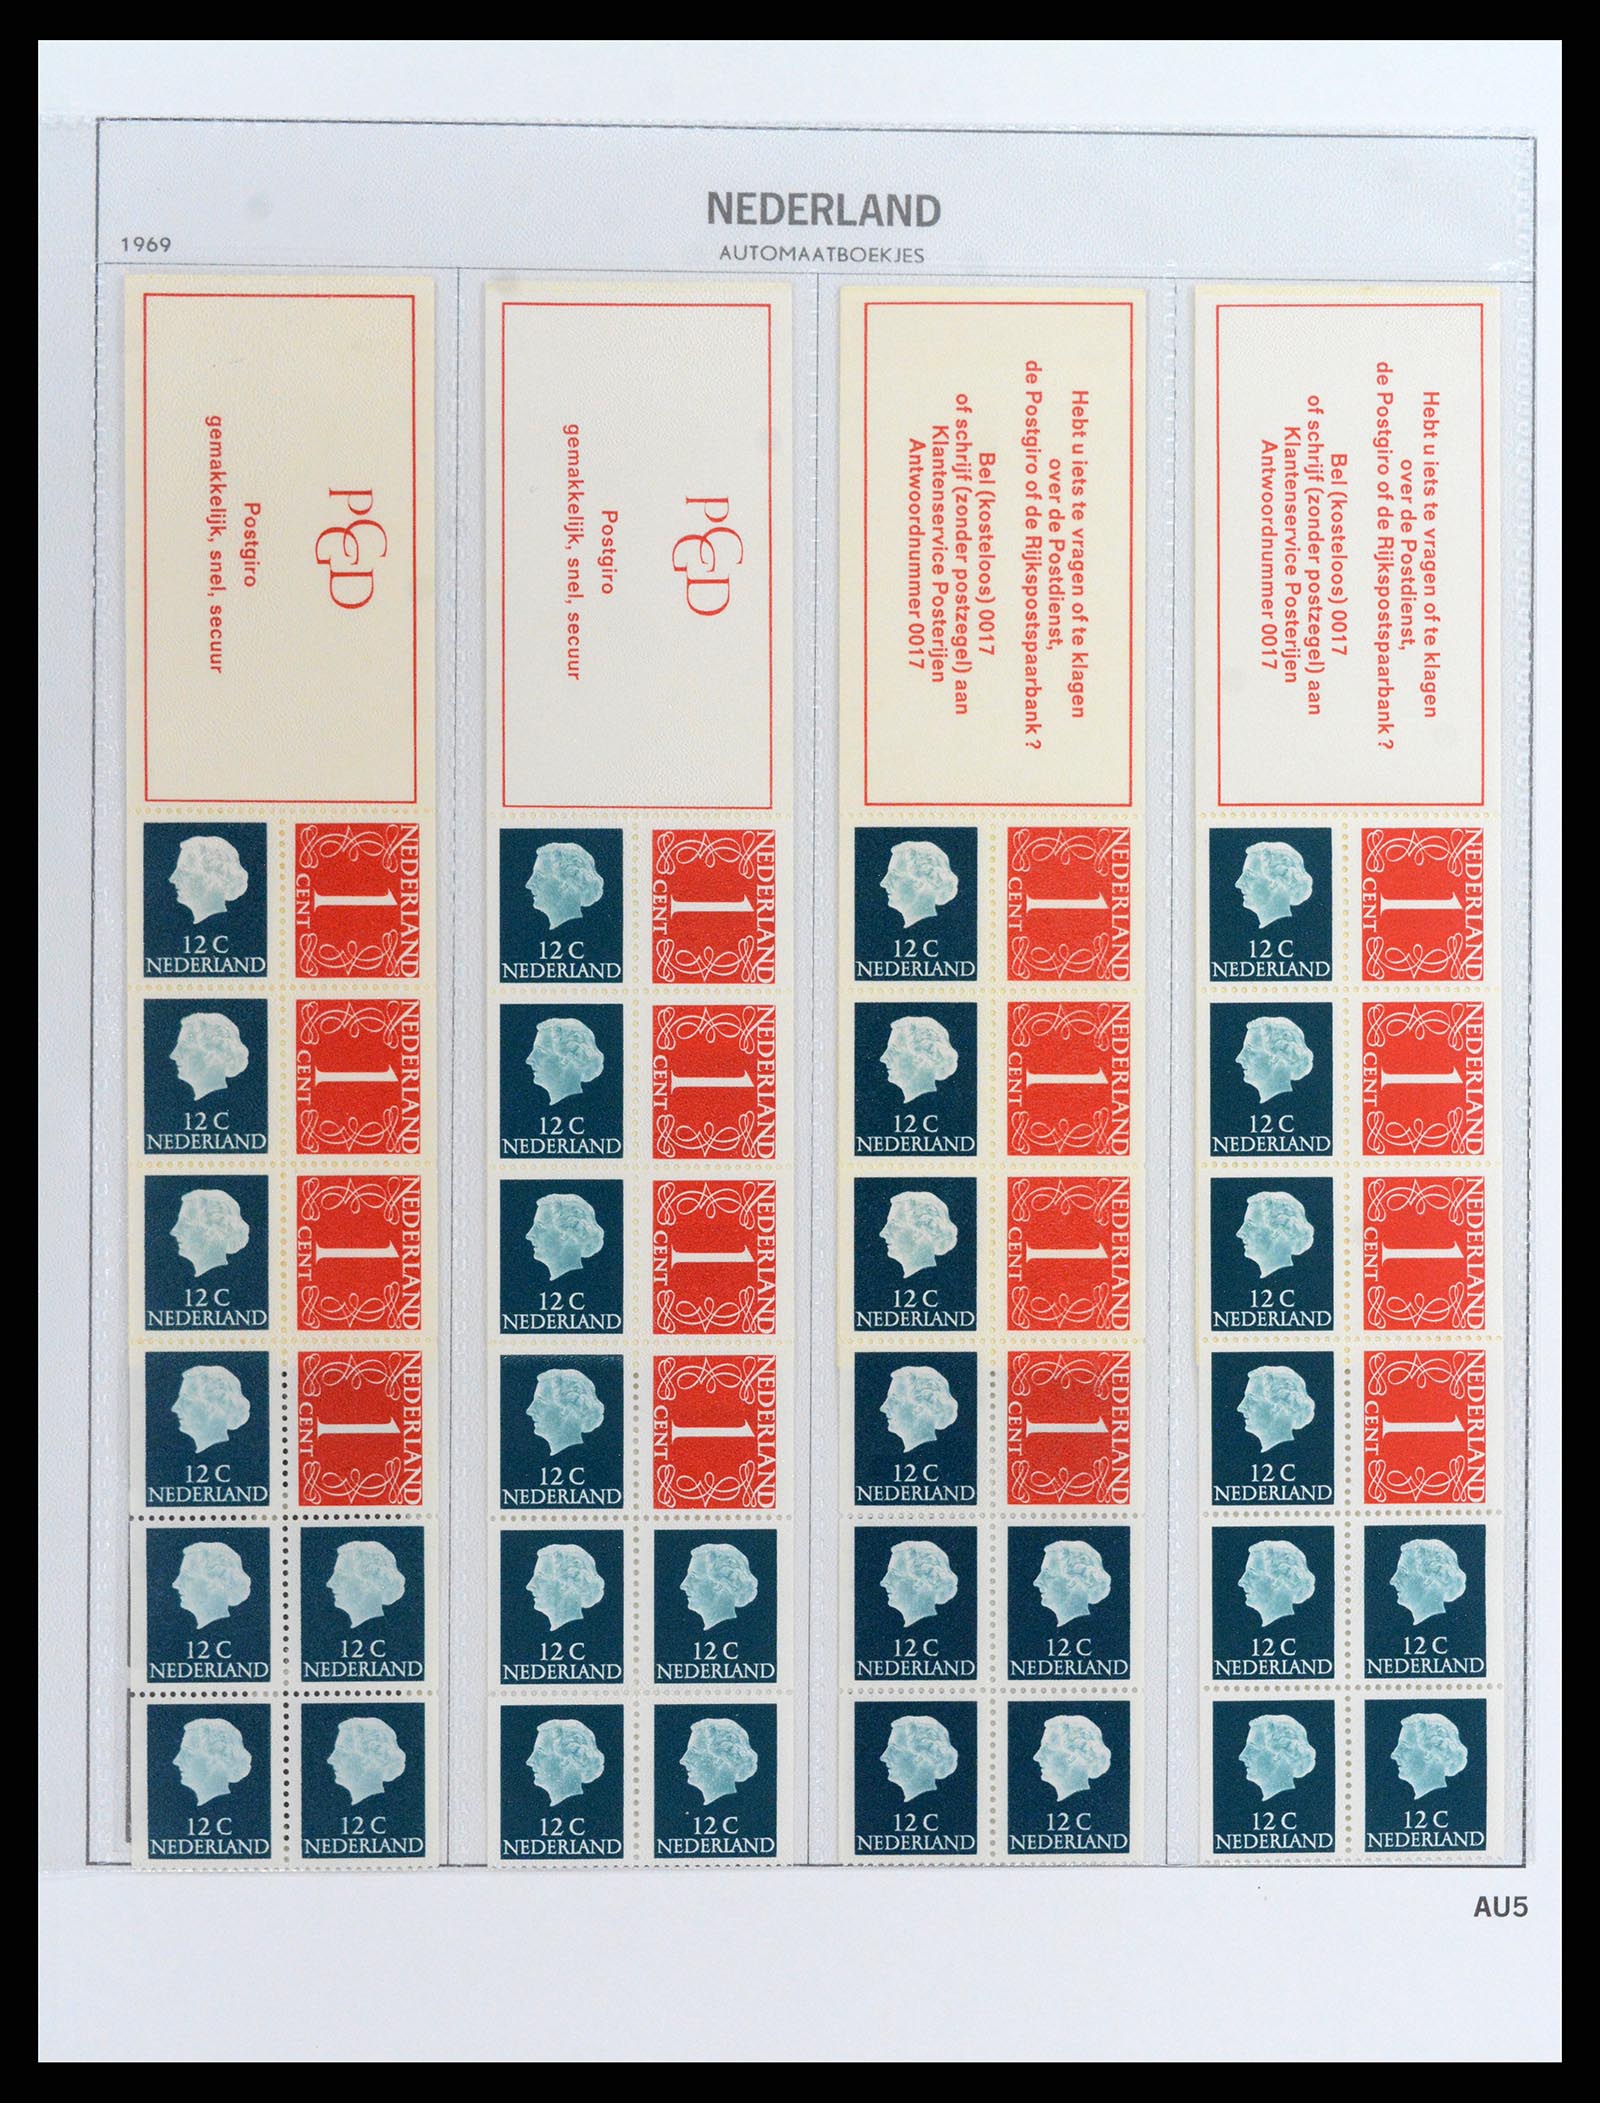 37871 005 - Postzegelverzameling 37871 Nederland automaatboekjes 1964-2000.